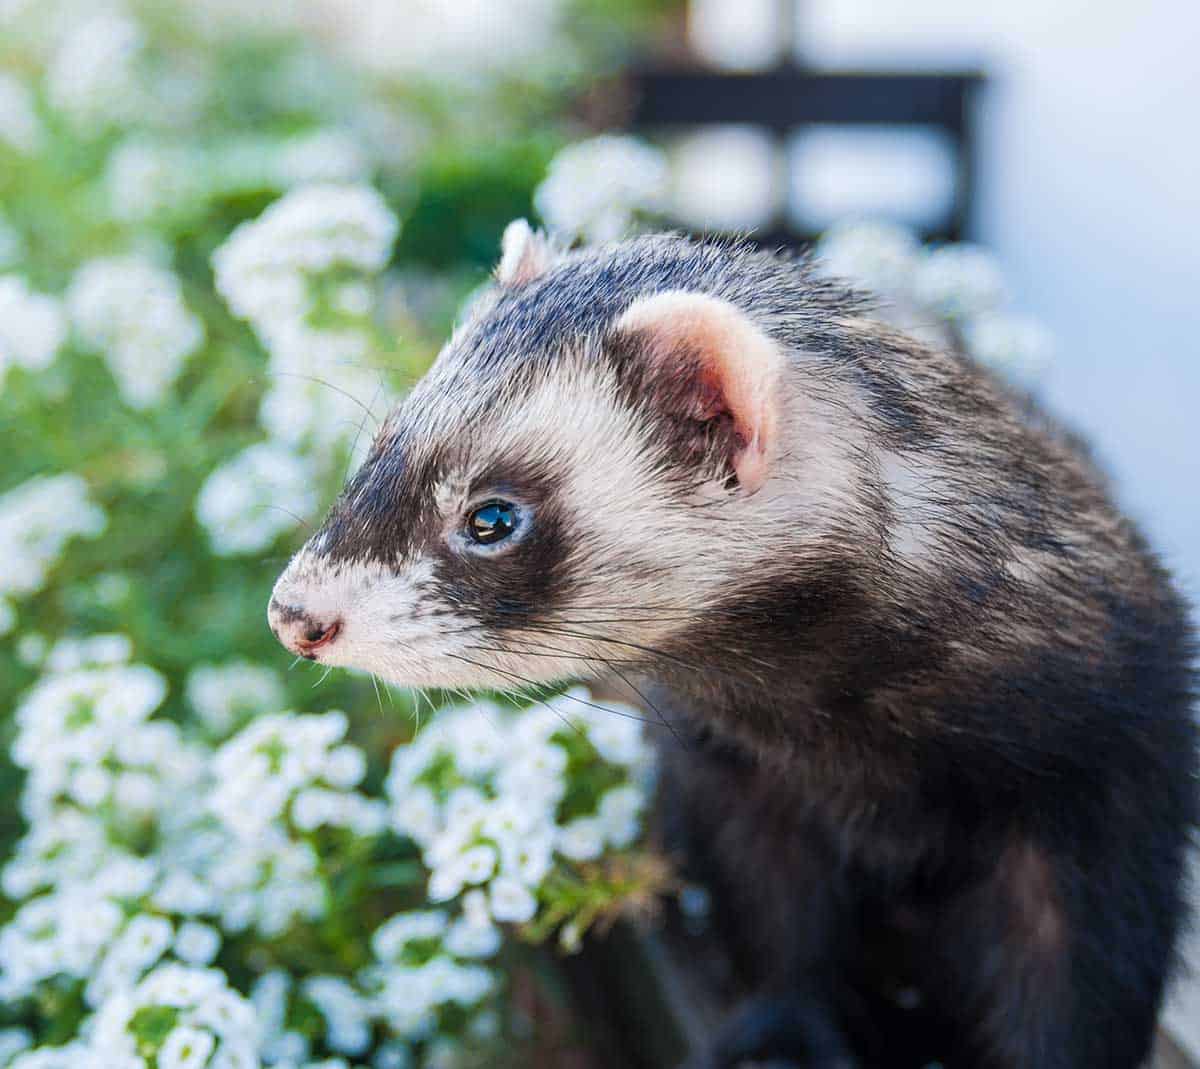 A ferret in a flowerbed